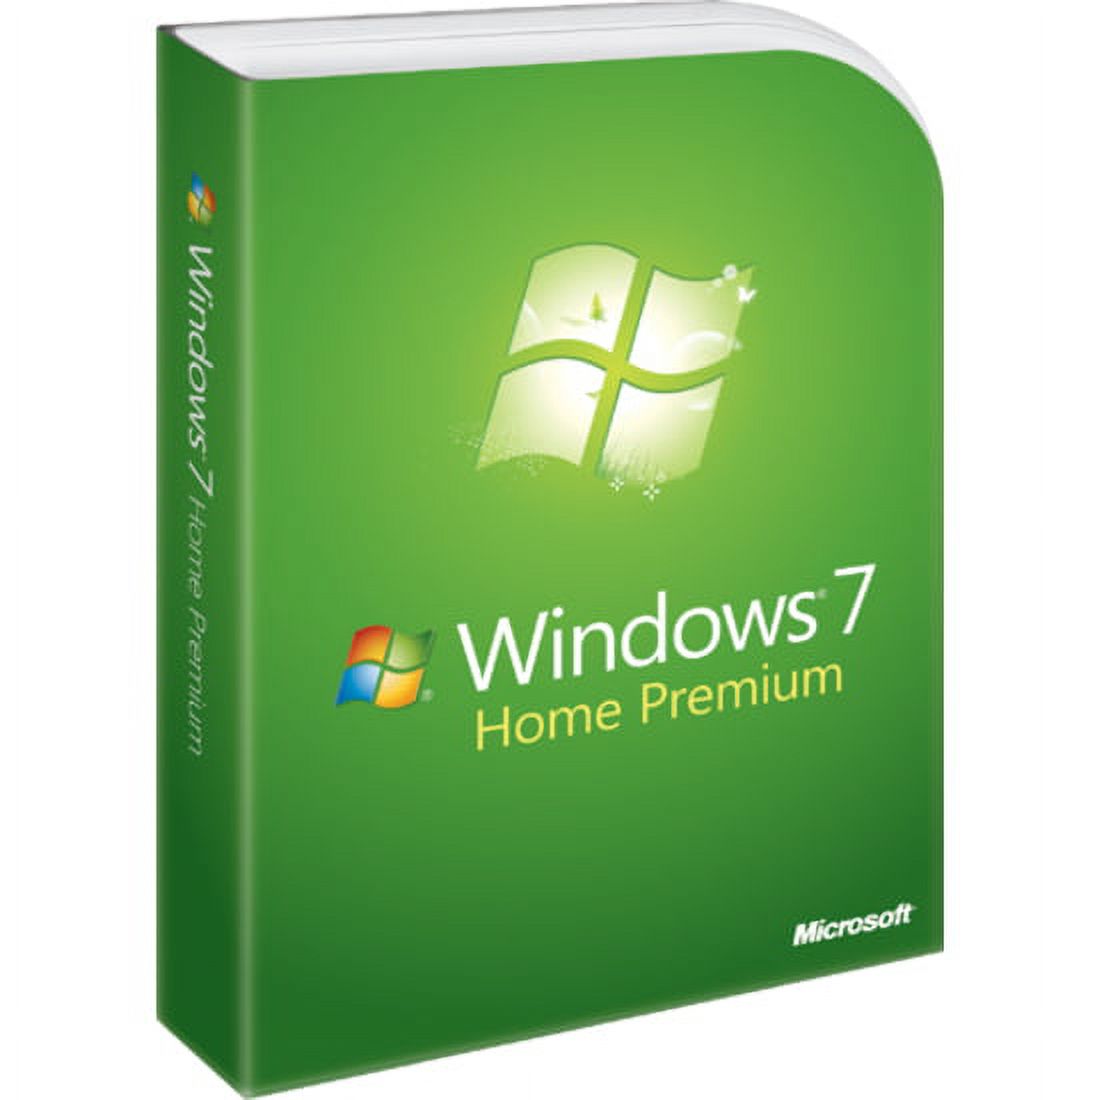 Microsoft Windows 7 Home Premium - image 1 of 2